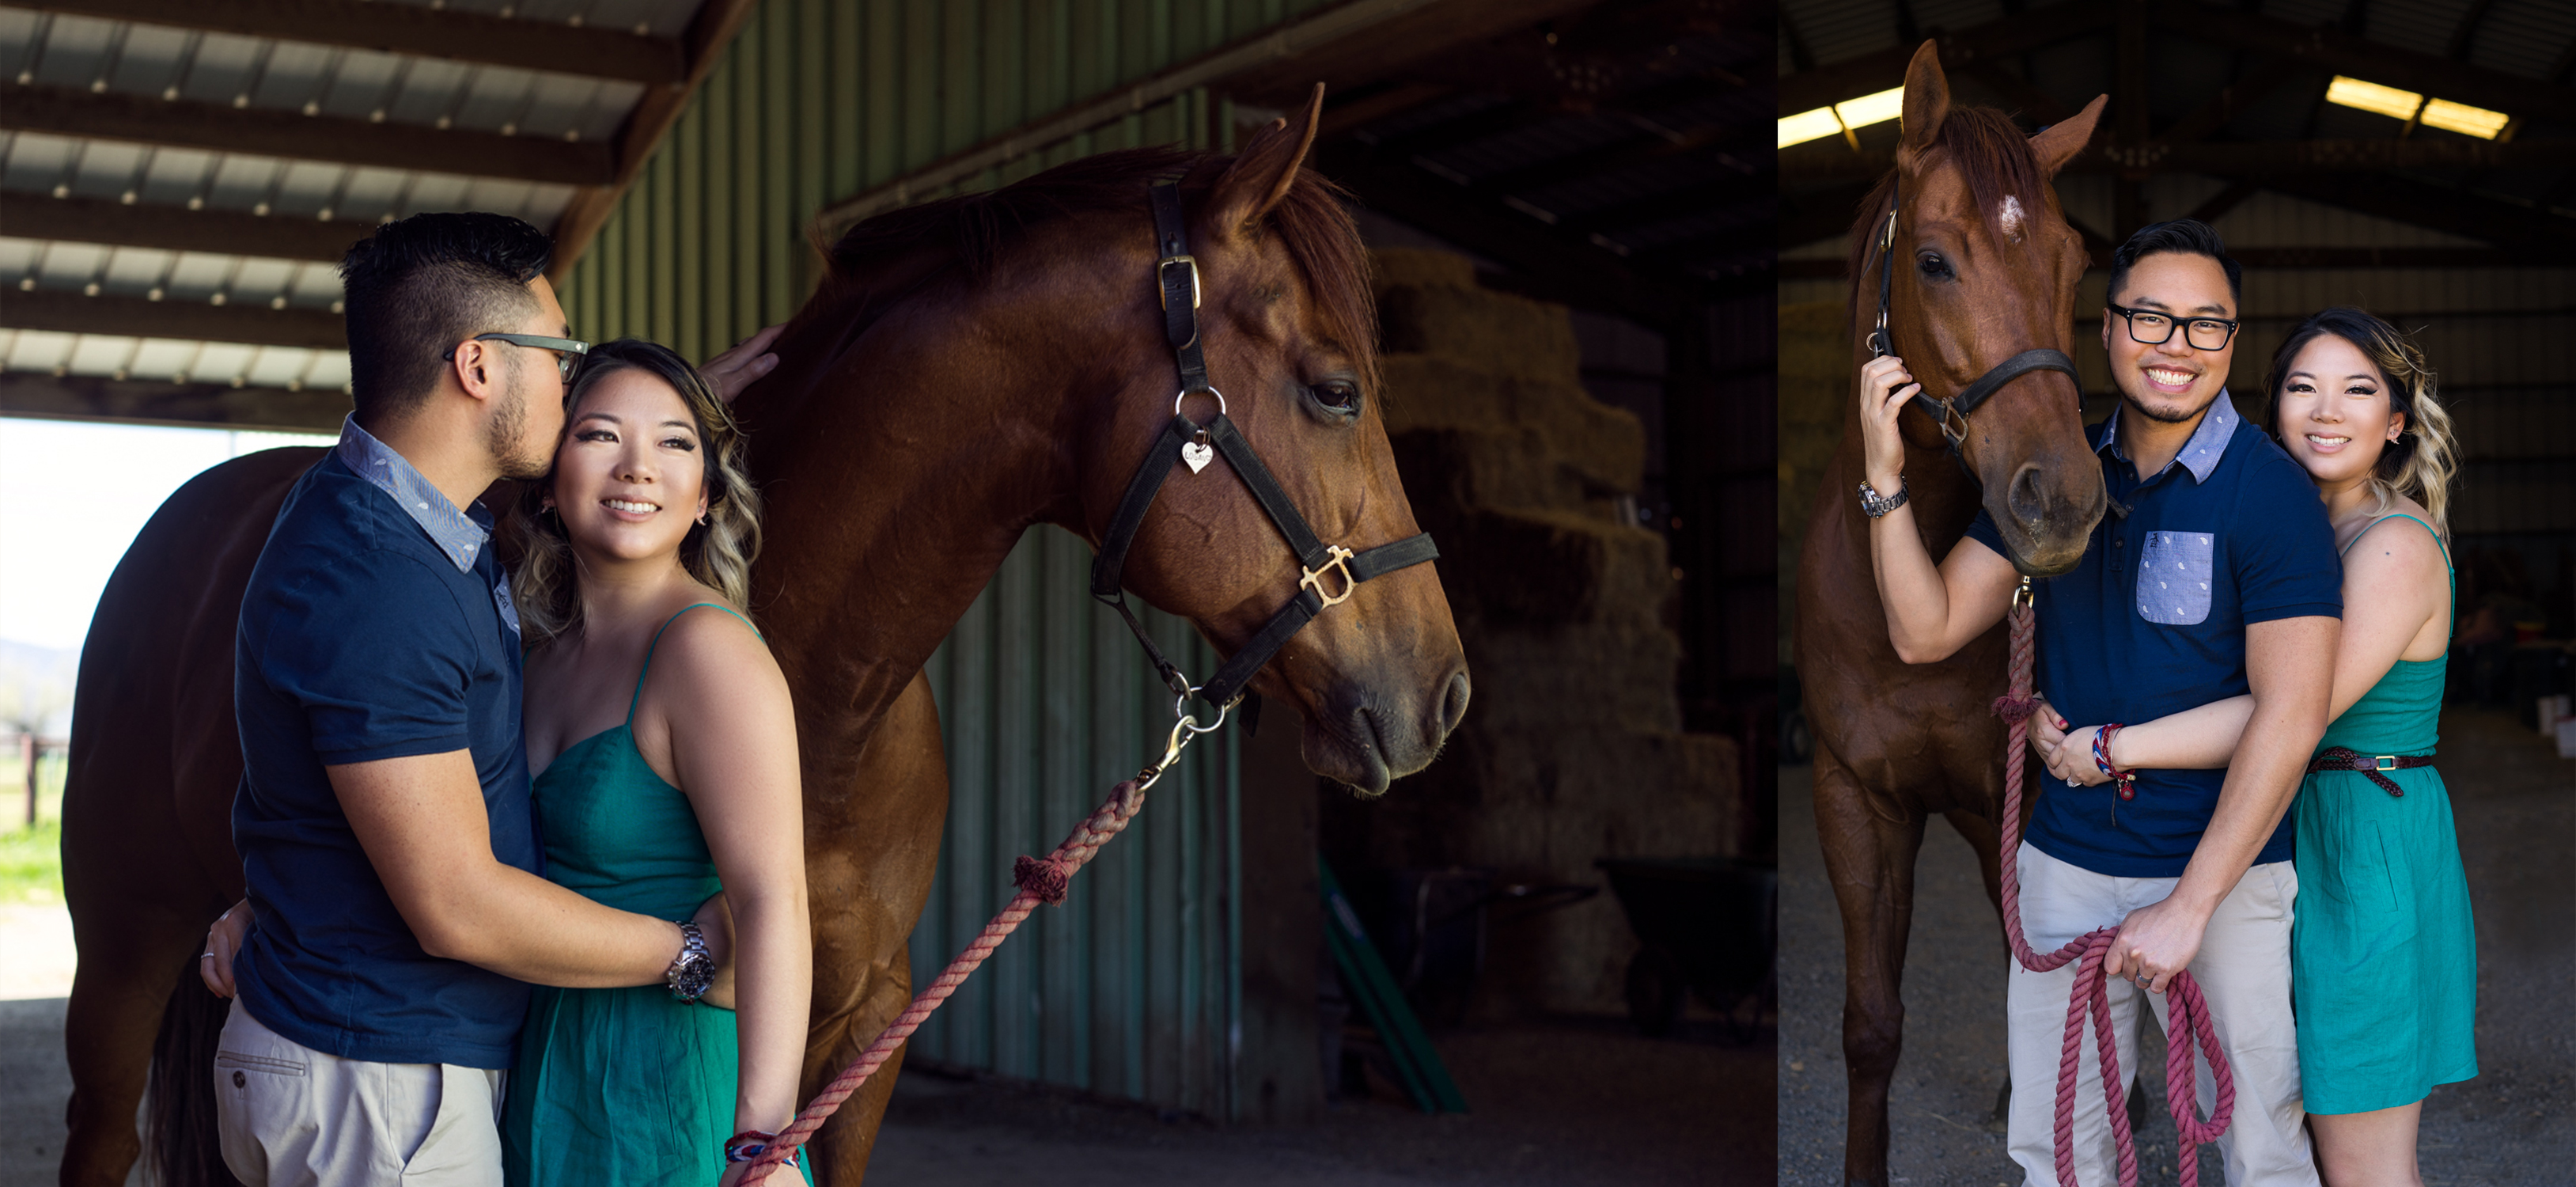 shar-greg-equestrian-couple-davidsuhphotography-blog